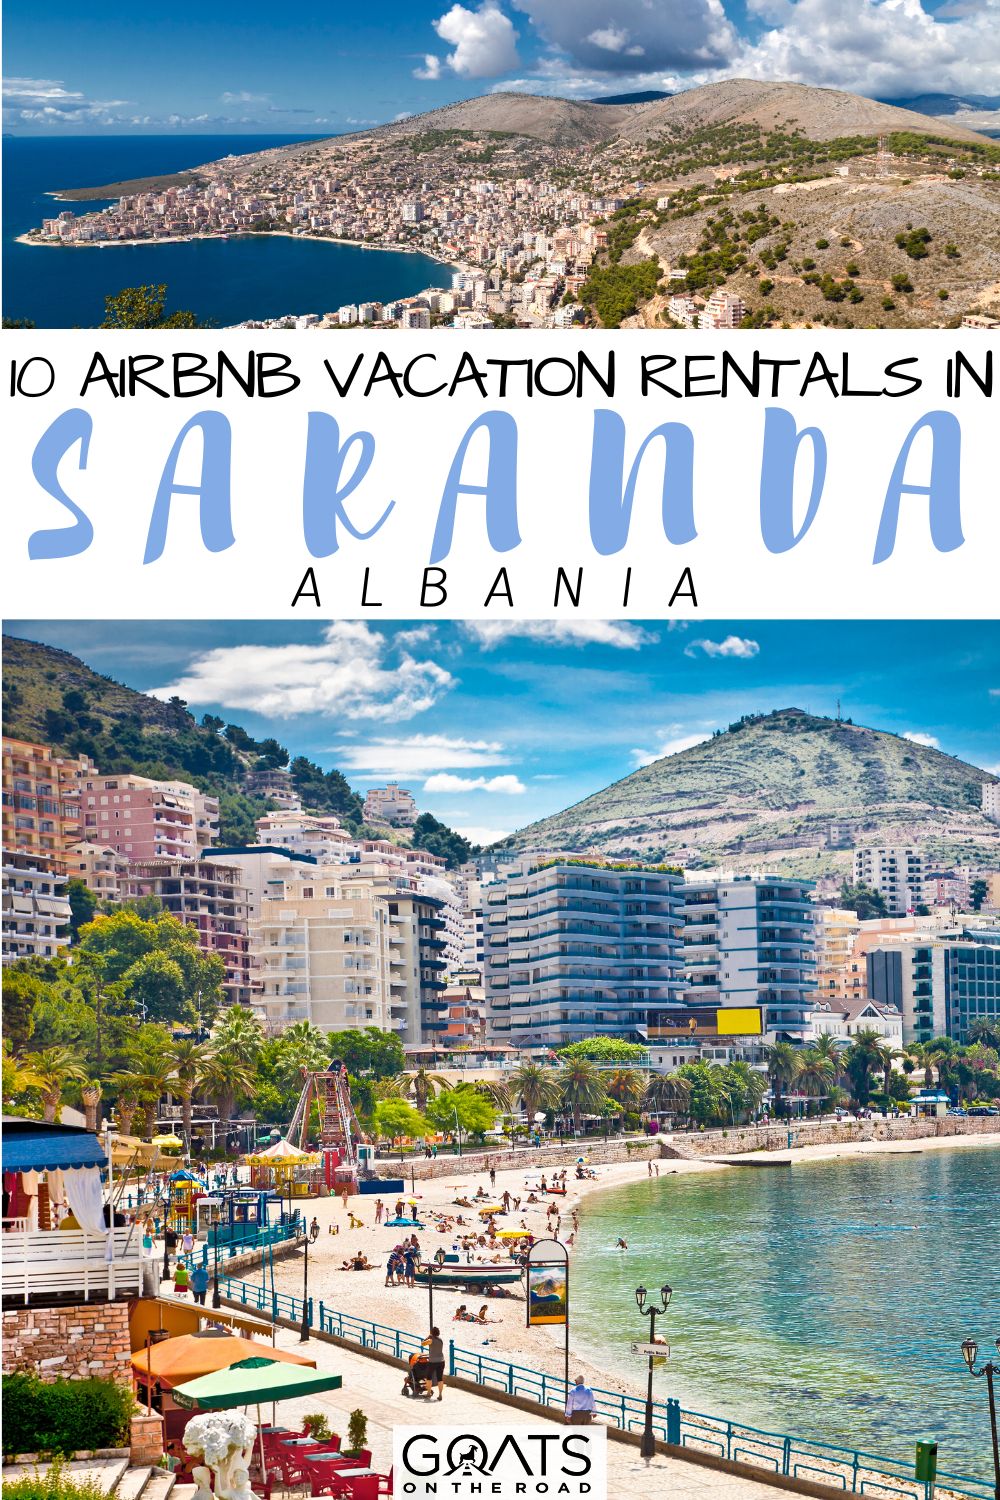 “10 Airbnb Vacation Rentals in Saranda, Albania